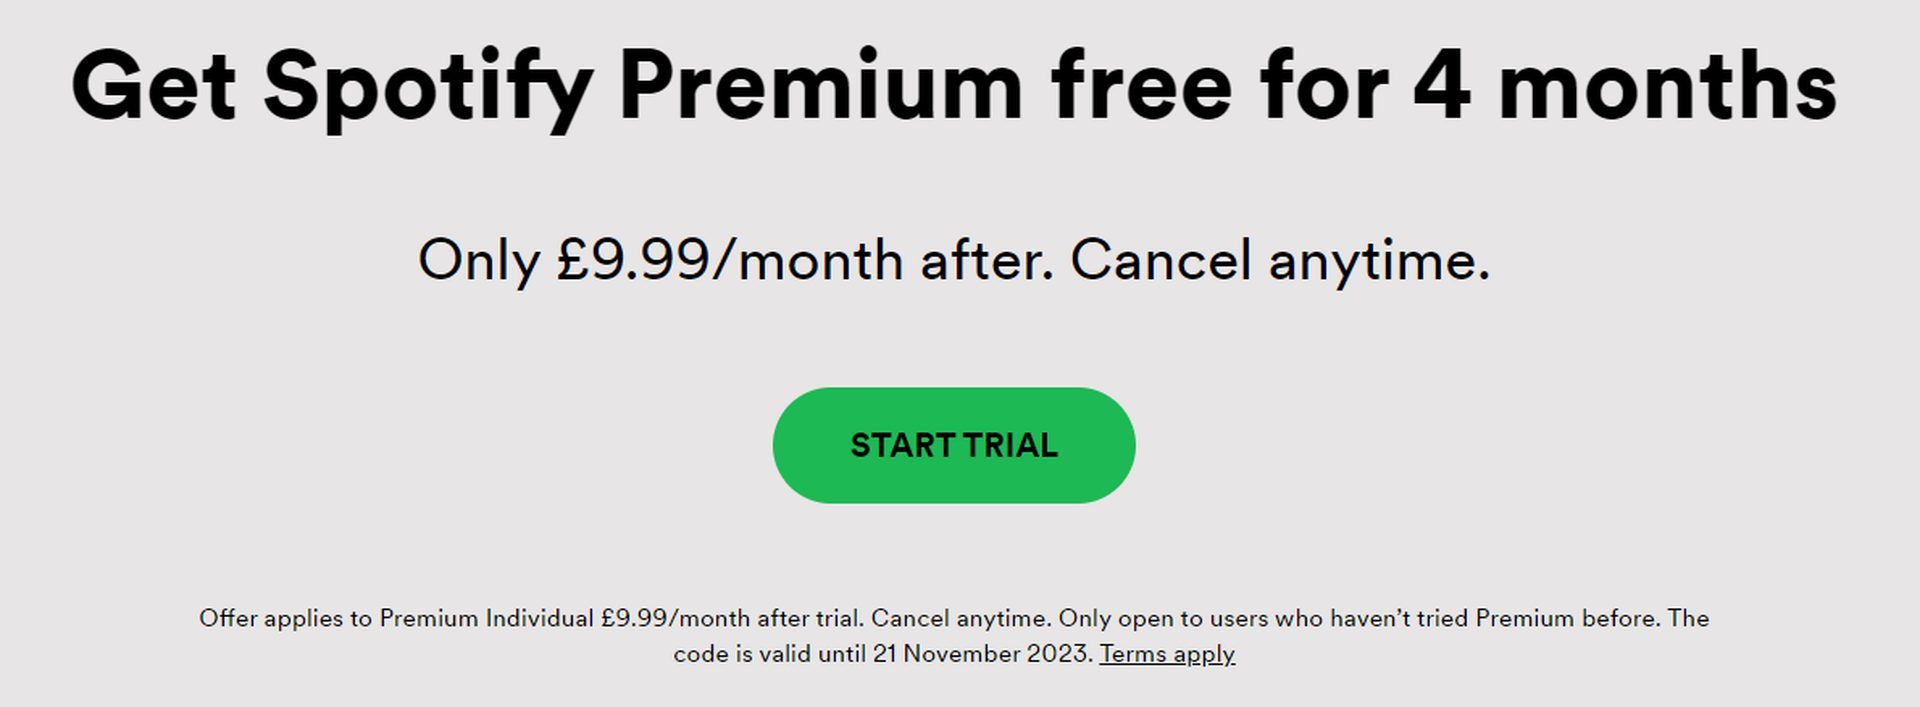 Spotify Premium 4 months free